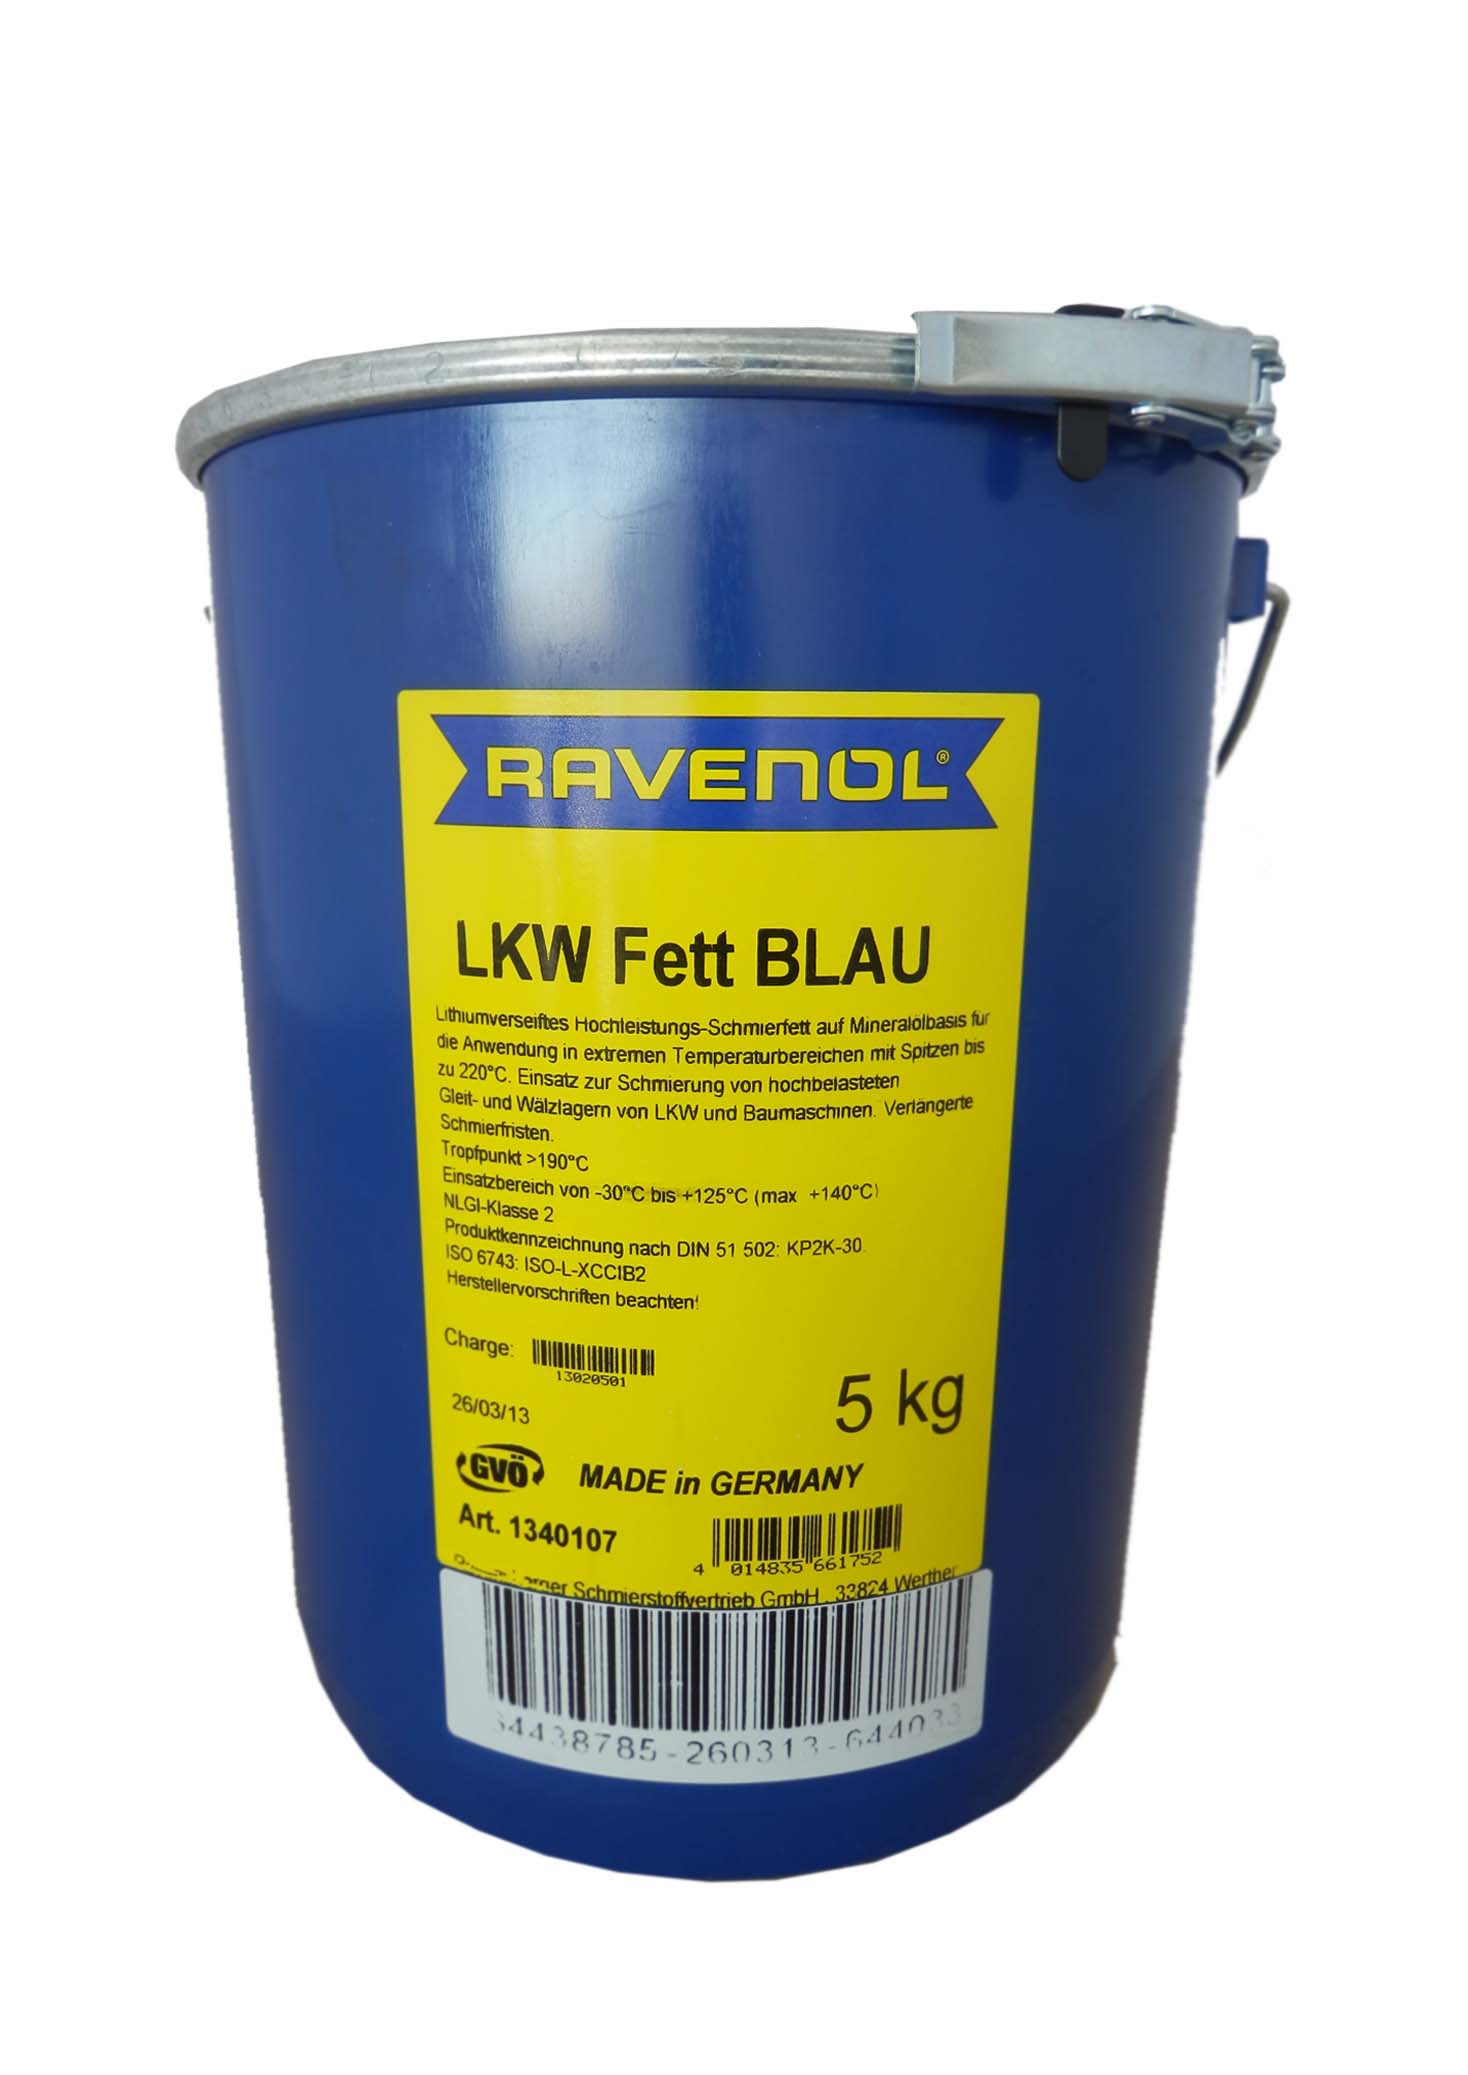 Купить запчасть RAVENOL - 4014835661752 Смазка для подшипников LKW Fett Blau